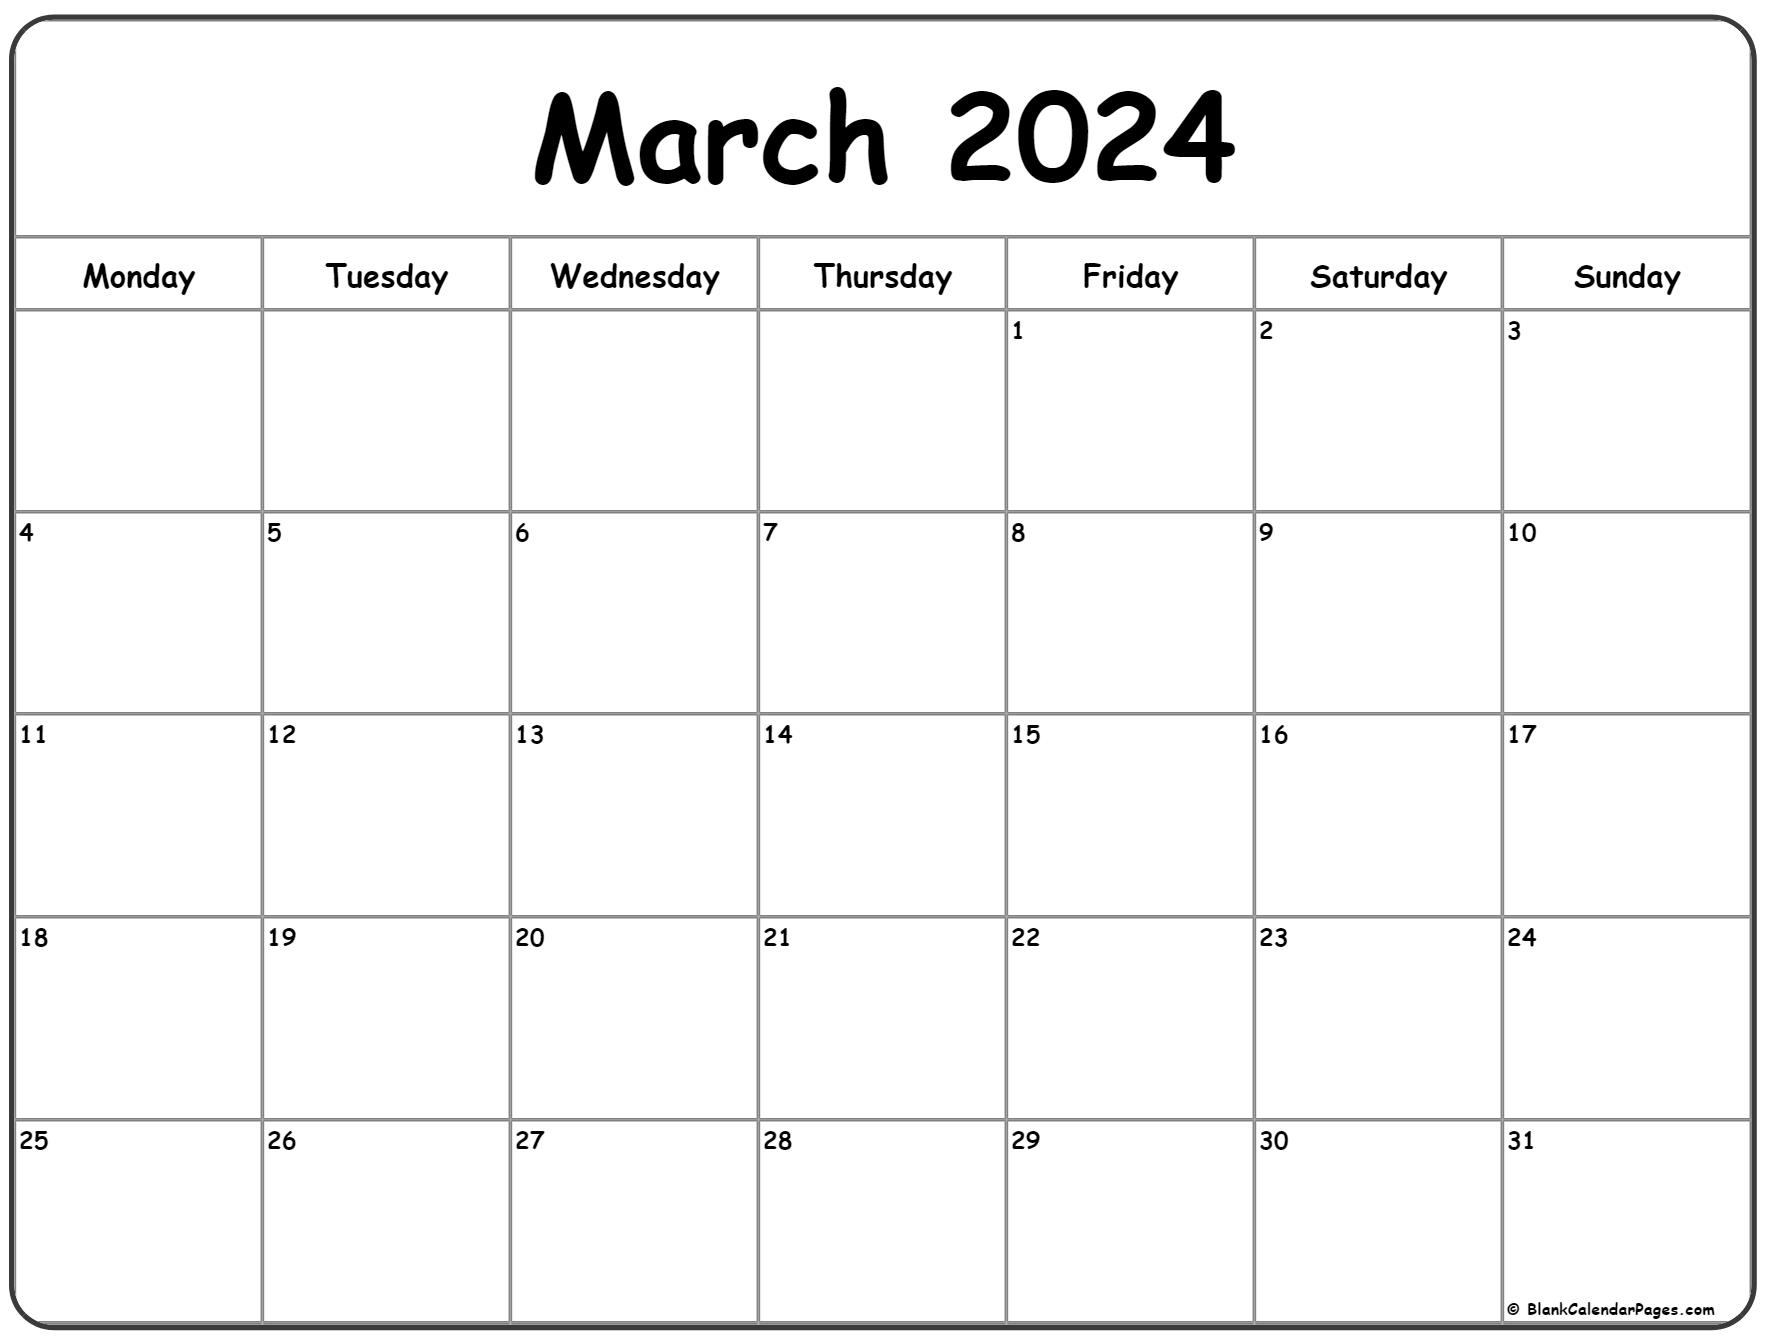 March 2024 Monday Calendar | Monday To Sunday for March 2024 Printable Calendar Free